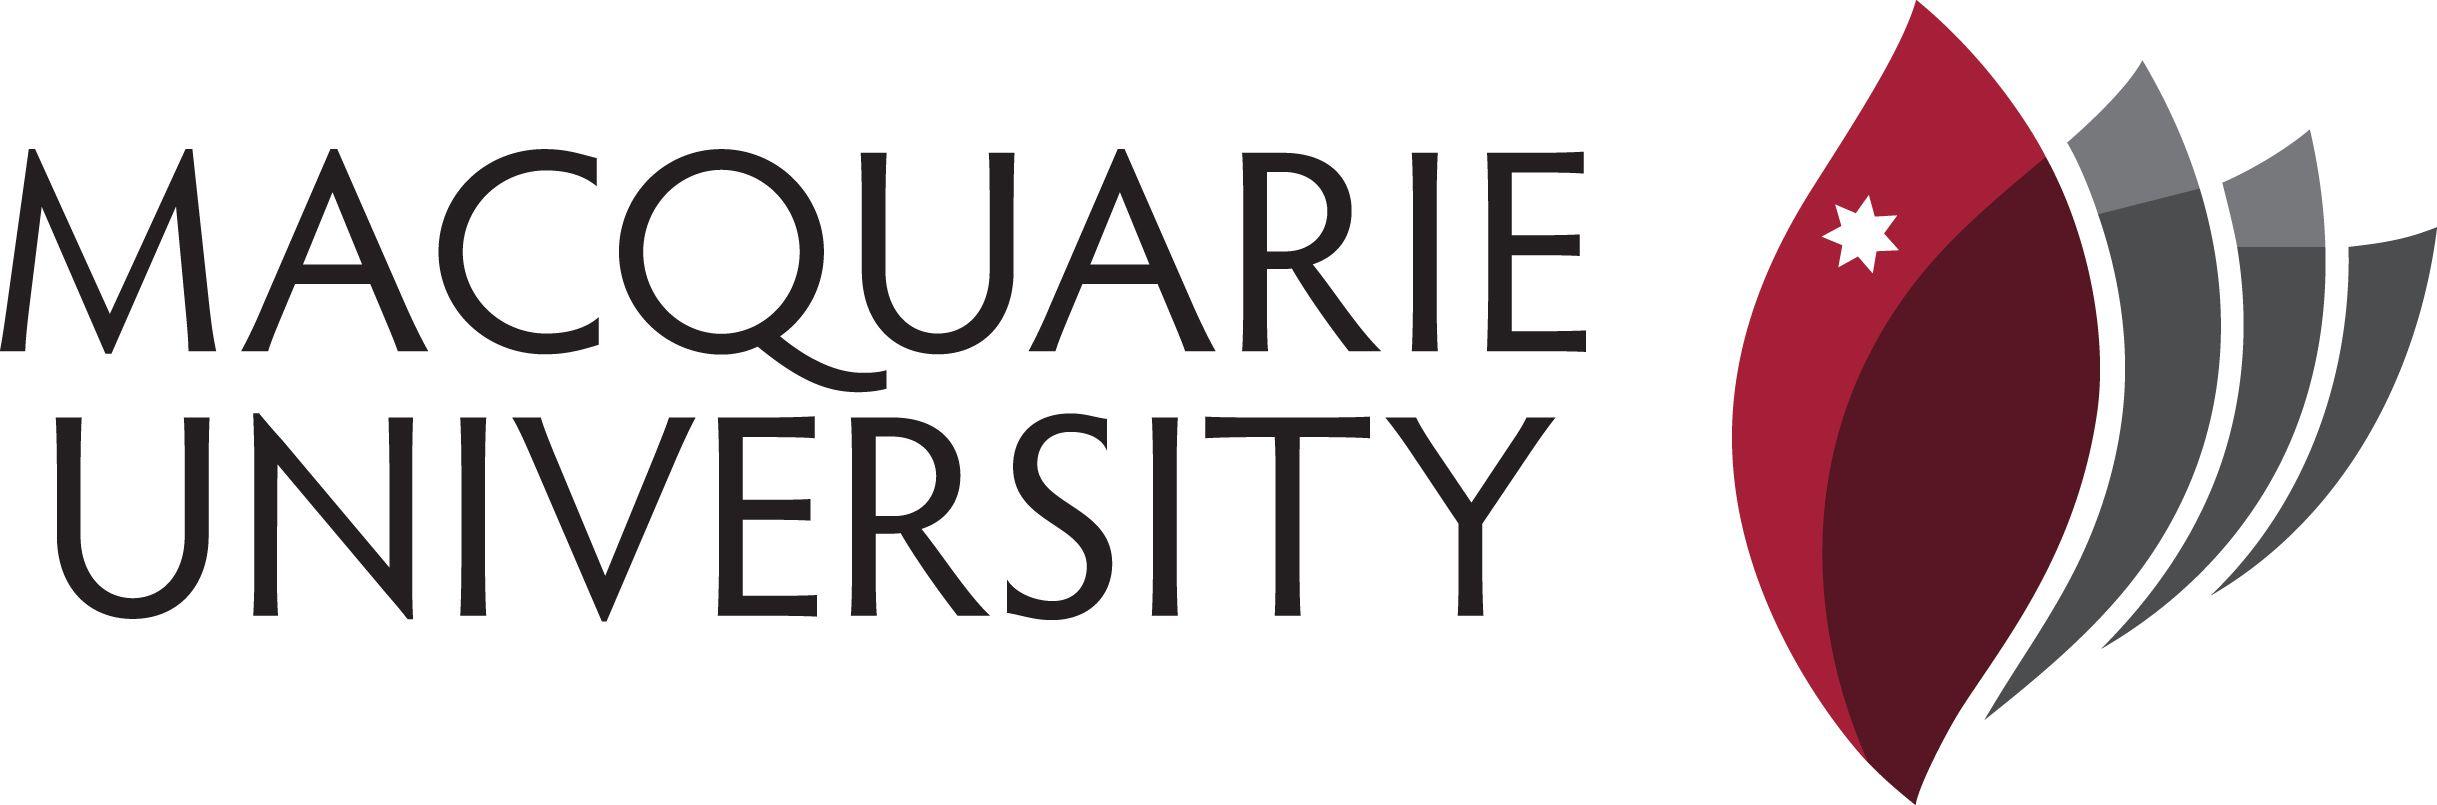 Macquarie Logo - Macquarie University Logo Font | Typophile